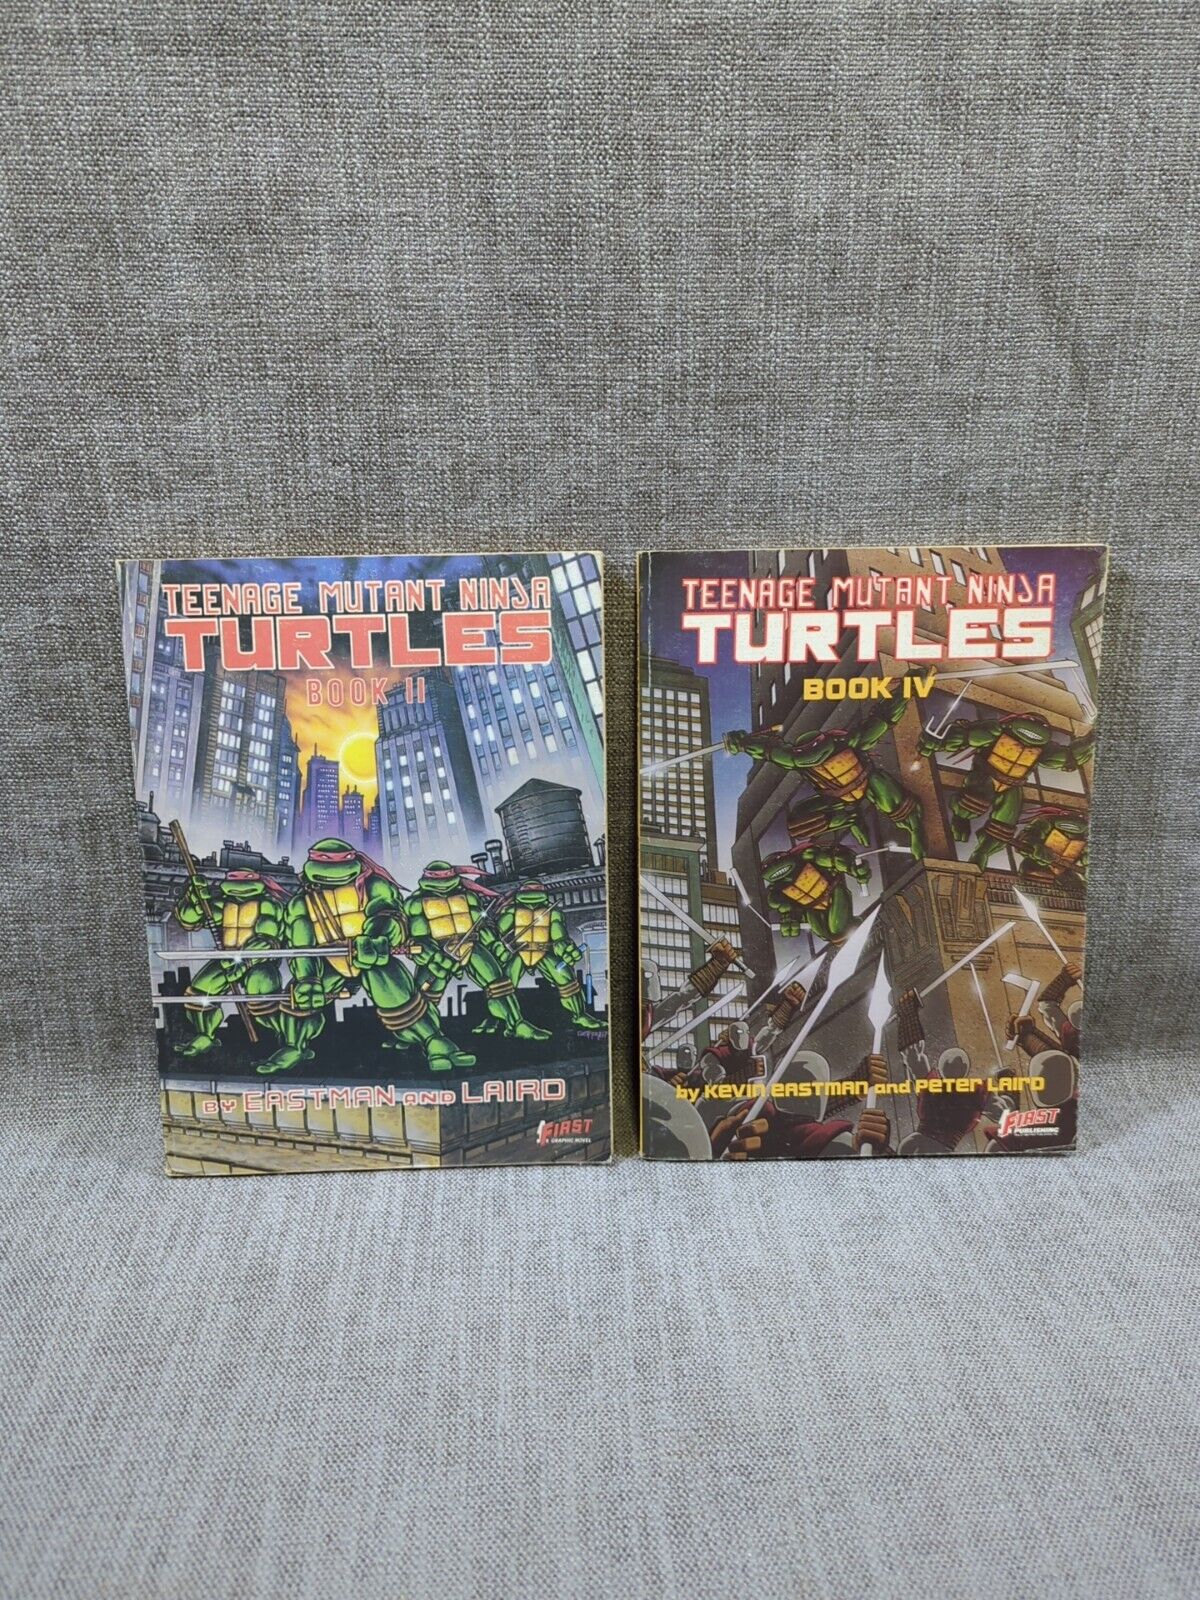 Teenage Mutant Ninja Turtles Book II 1989 (3rd Print) Book IV 1988 ( 1st Print )